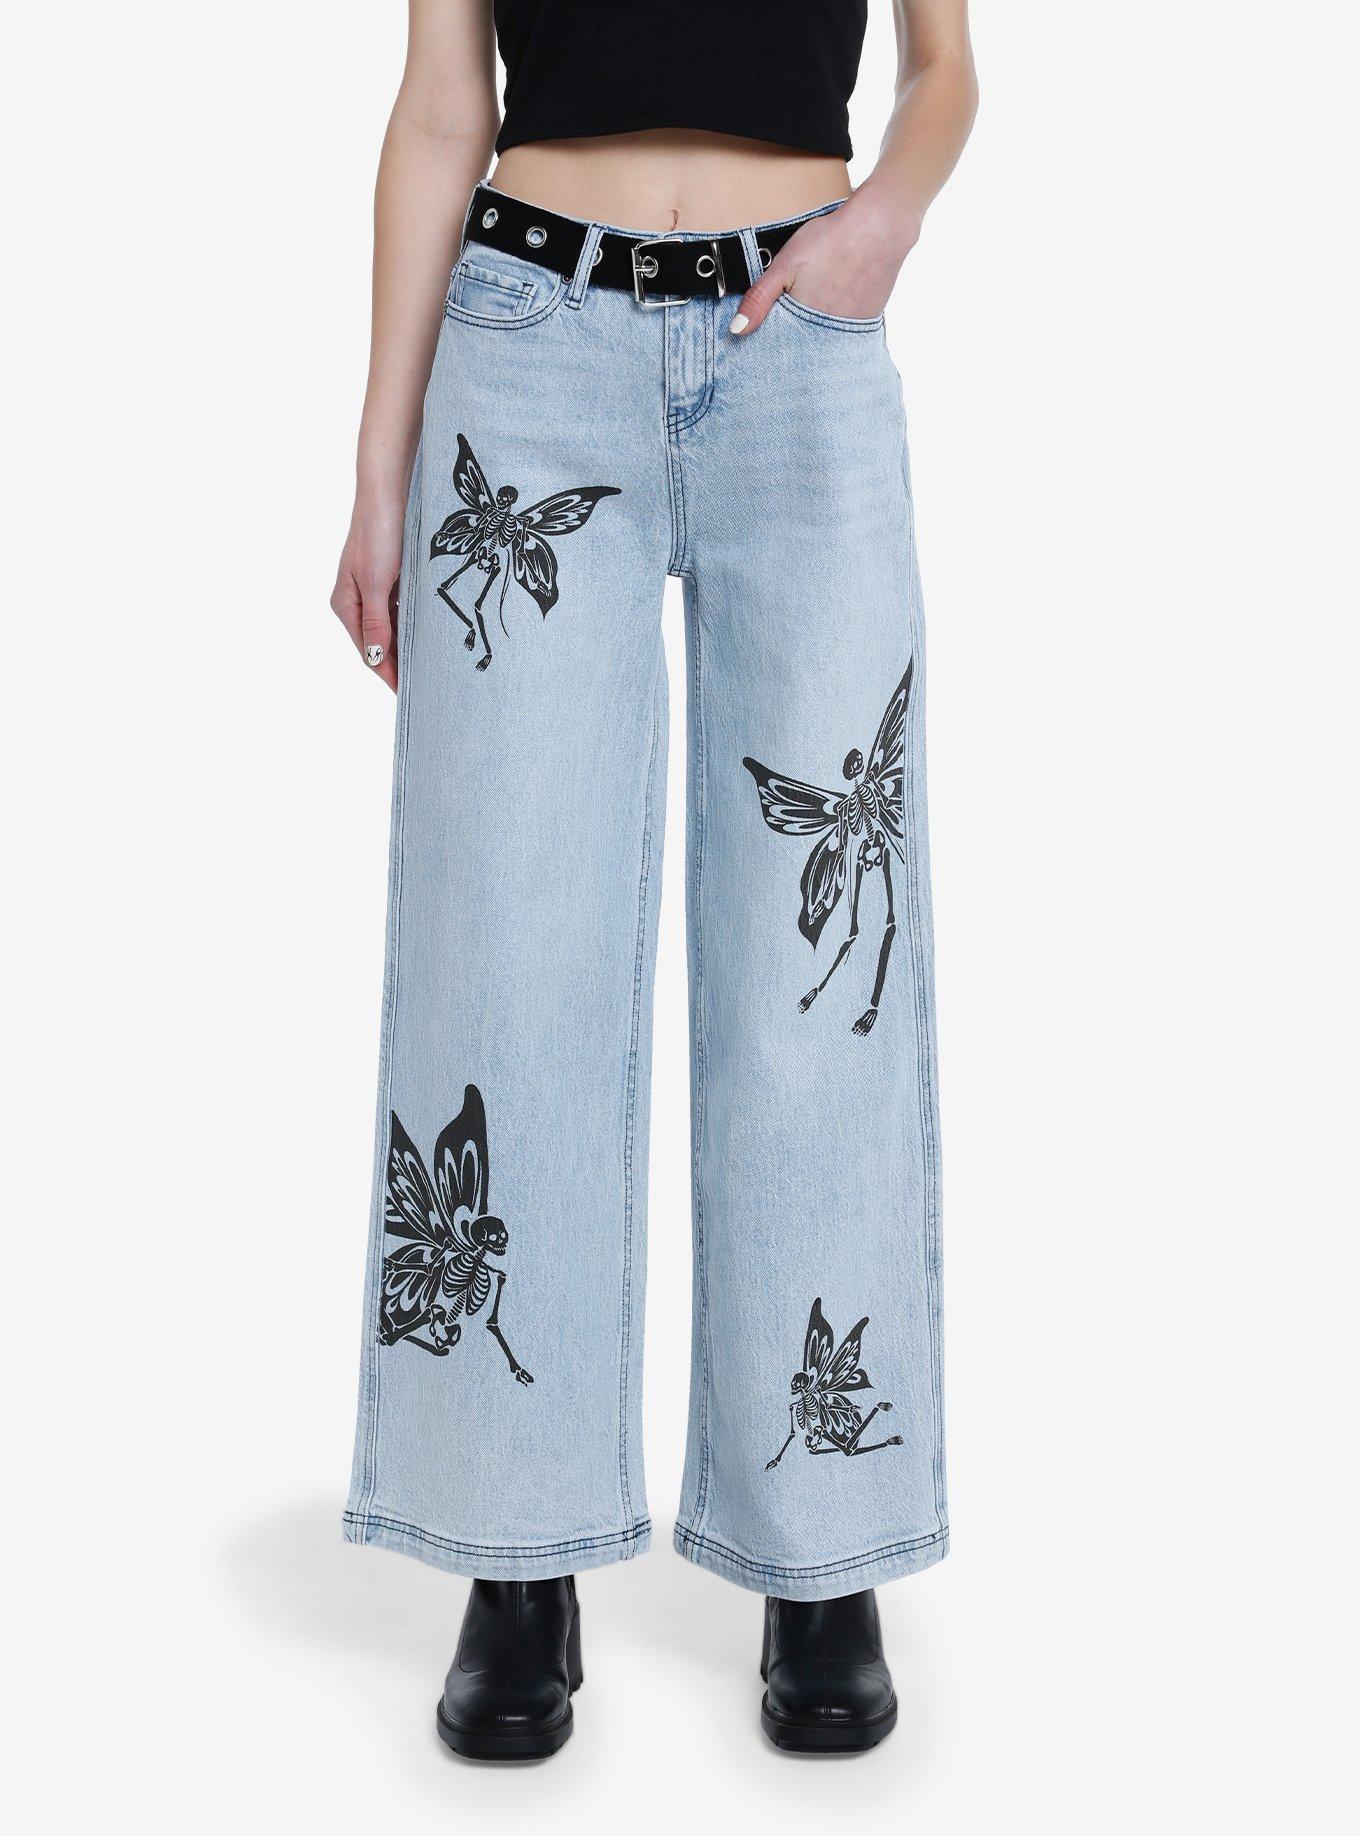 Women's Jeans Top Combo For College - Evilato